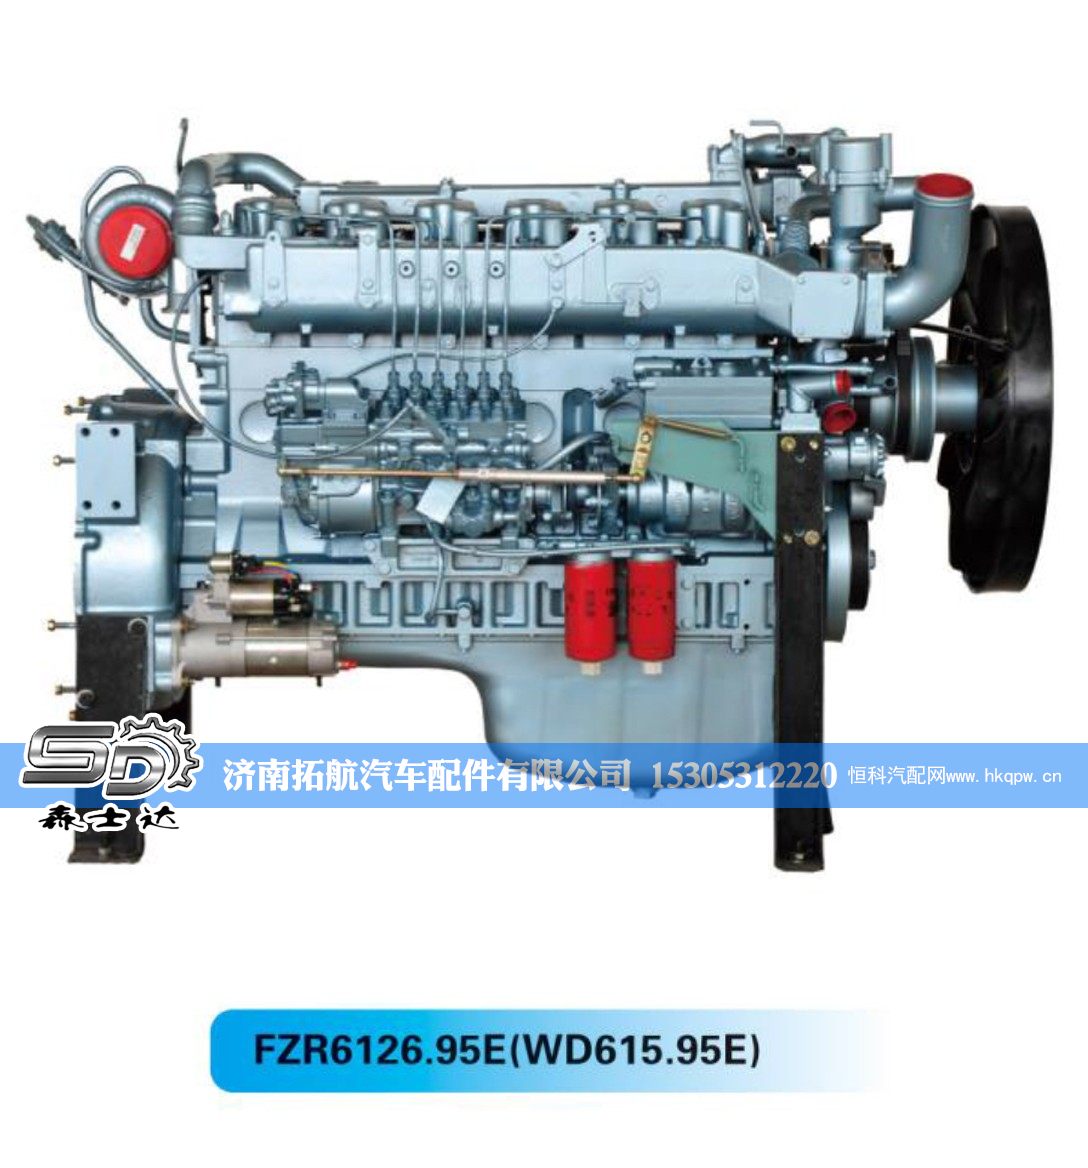 FZR6126.95E(WD615.95E),重汽发动机【森士达】,济南拓航汽车配件有限公司